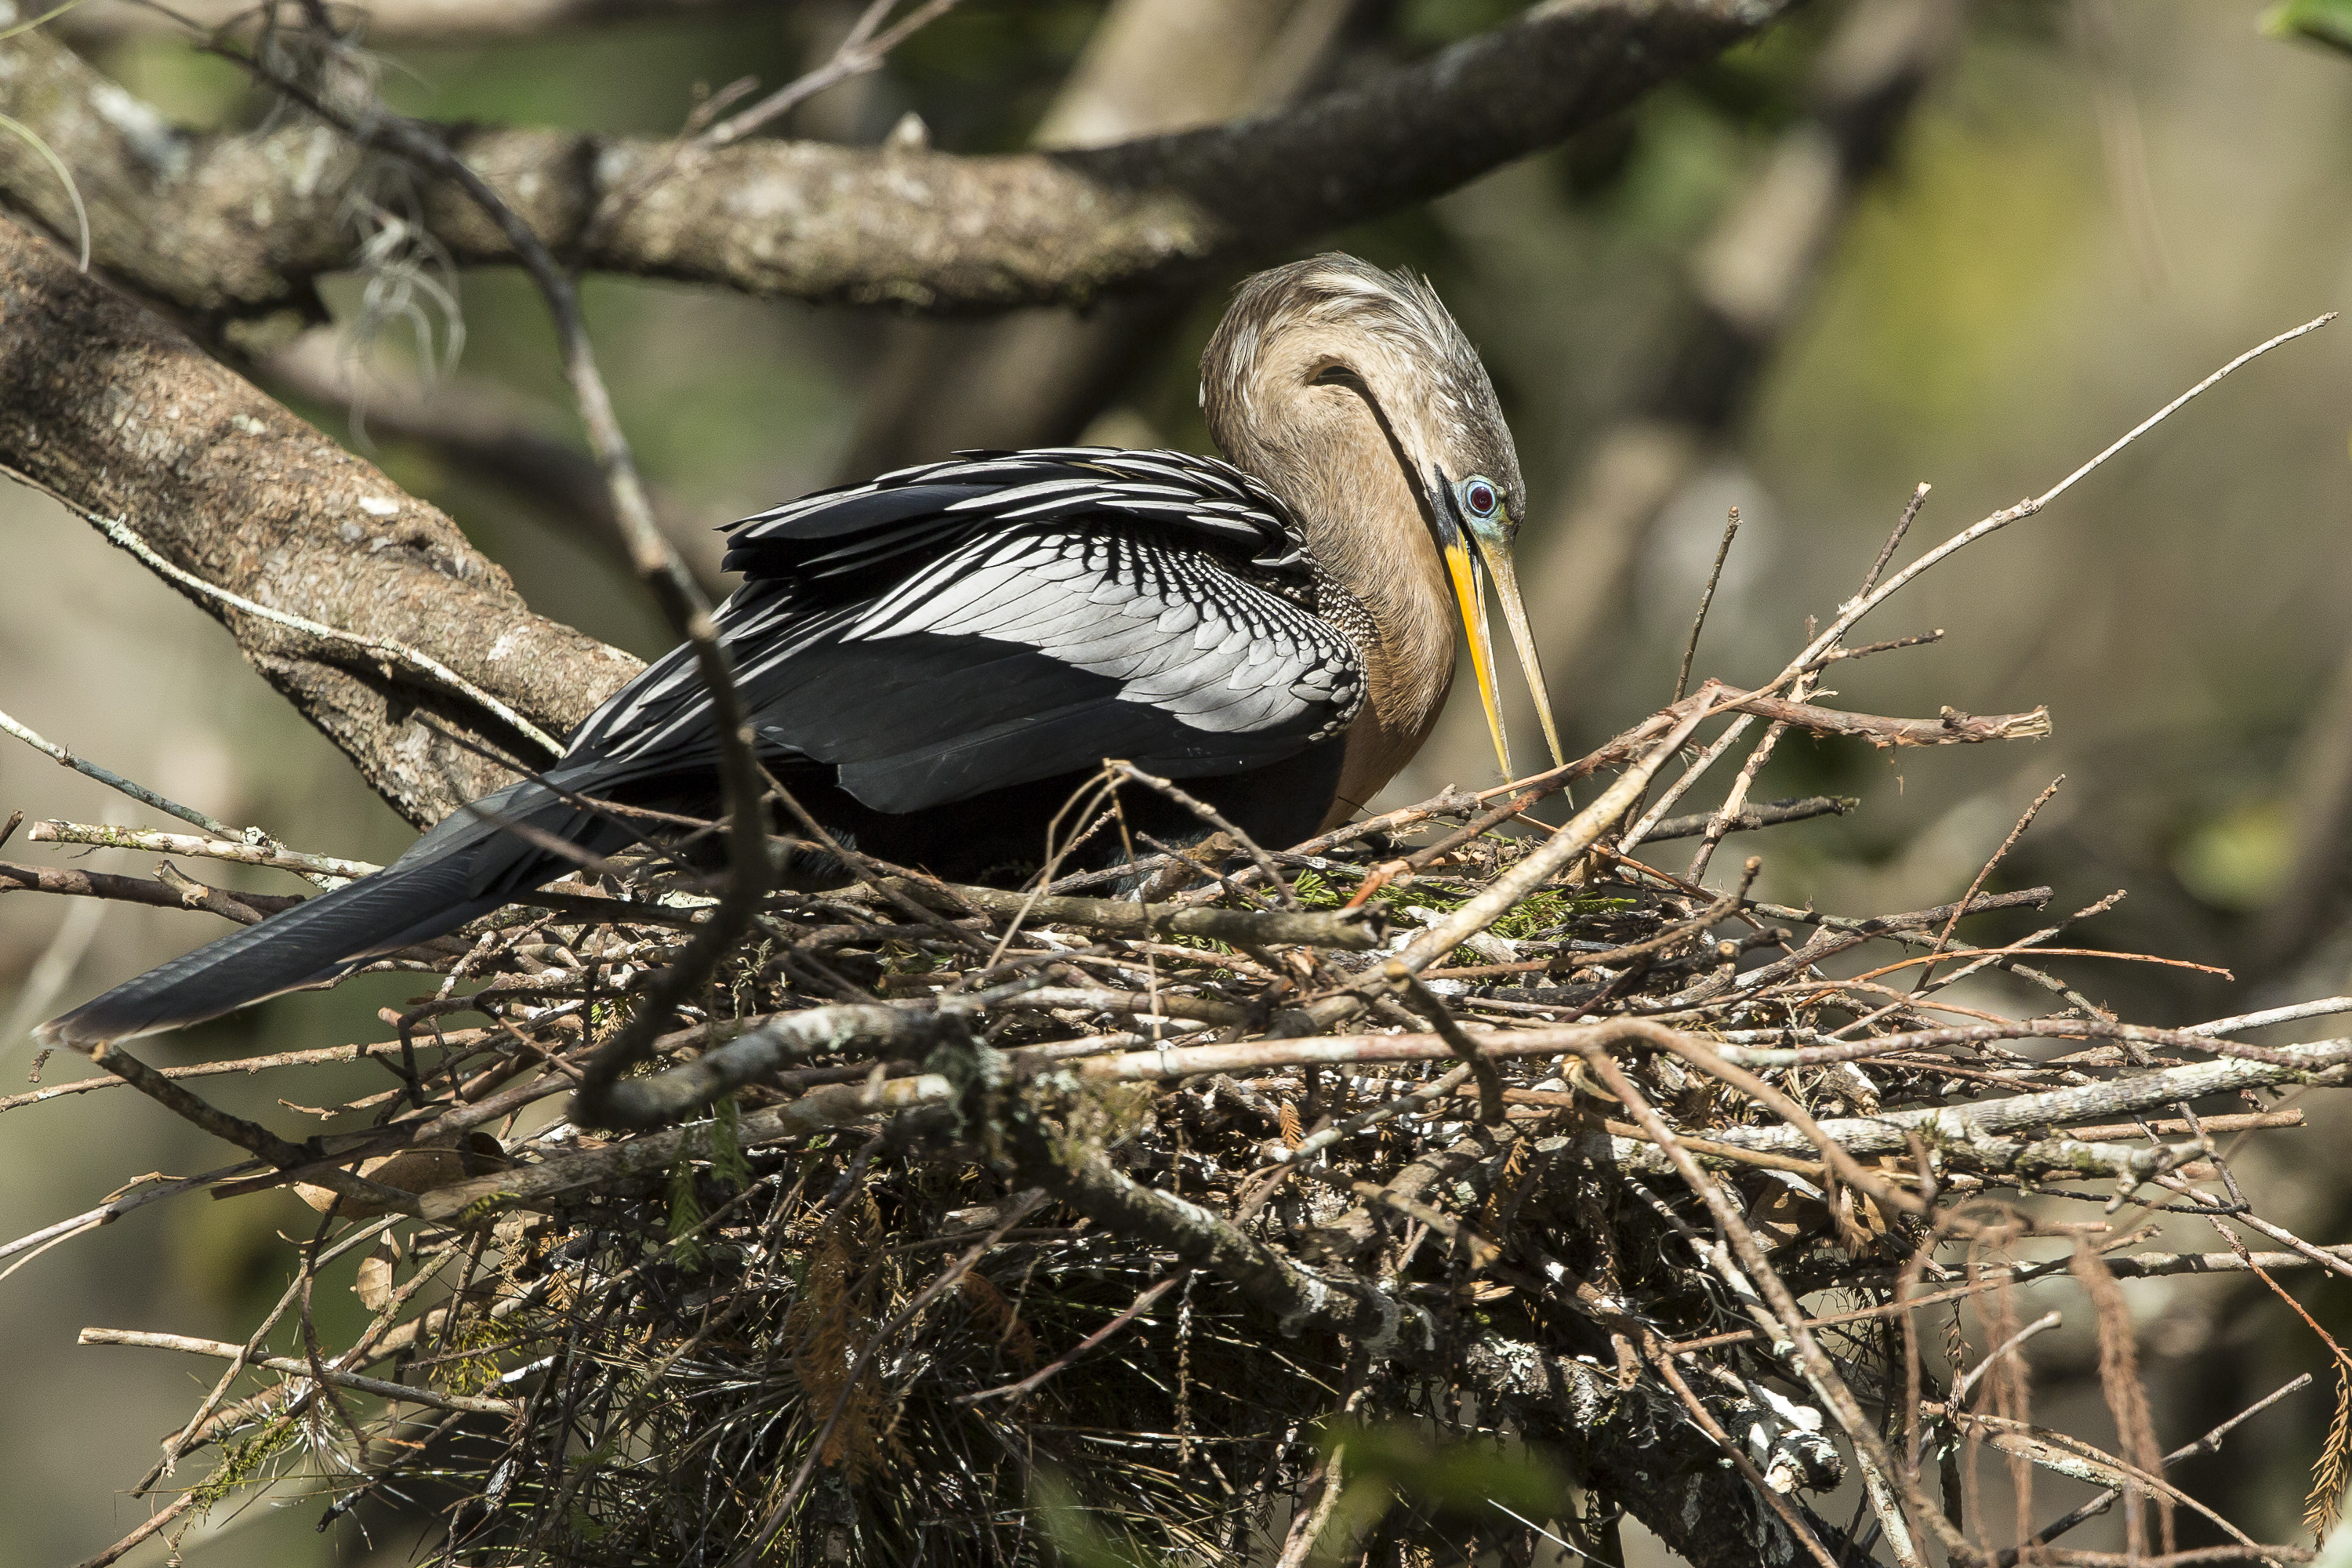 Anhinga sitting on a large stick nest, with tree limbs in the background. Photo: John Troth/Audubon Photography Awards.